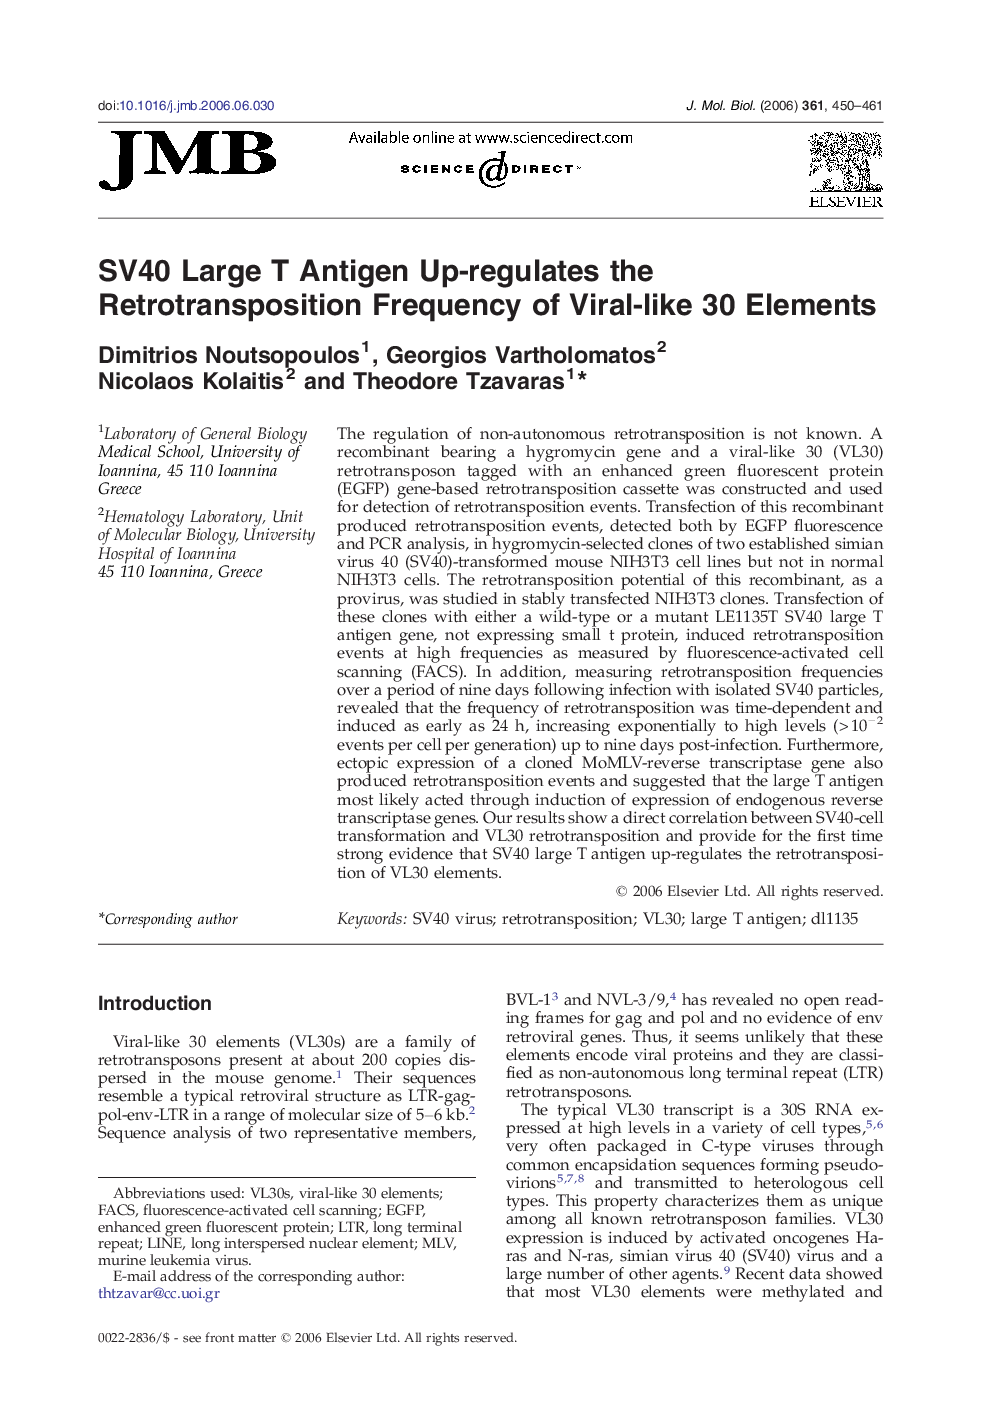 SV40 Large T Antigen Up-regulates the Retrotransposition Frequency of Viral-like 30 Elements